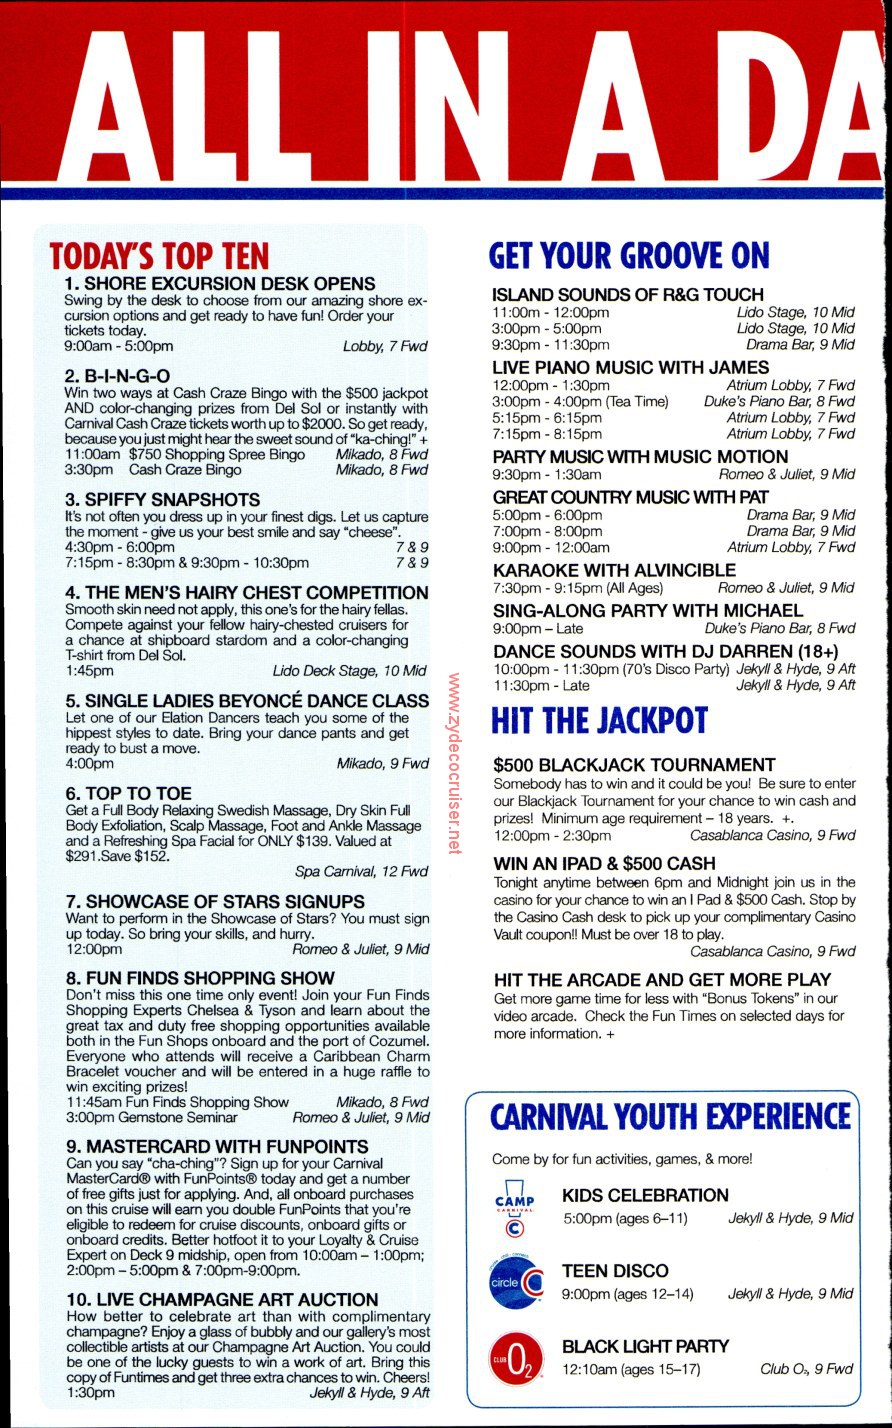 008: Carnival Elation 5 Day Fun Times, Feb 5, 2013, Page 2, 